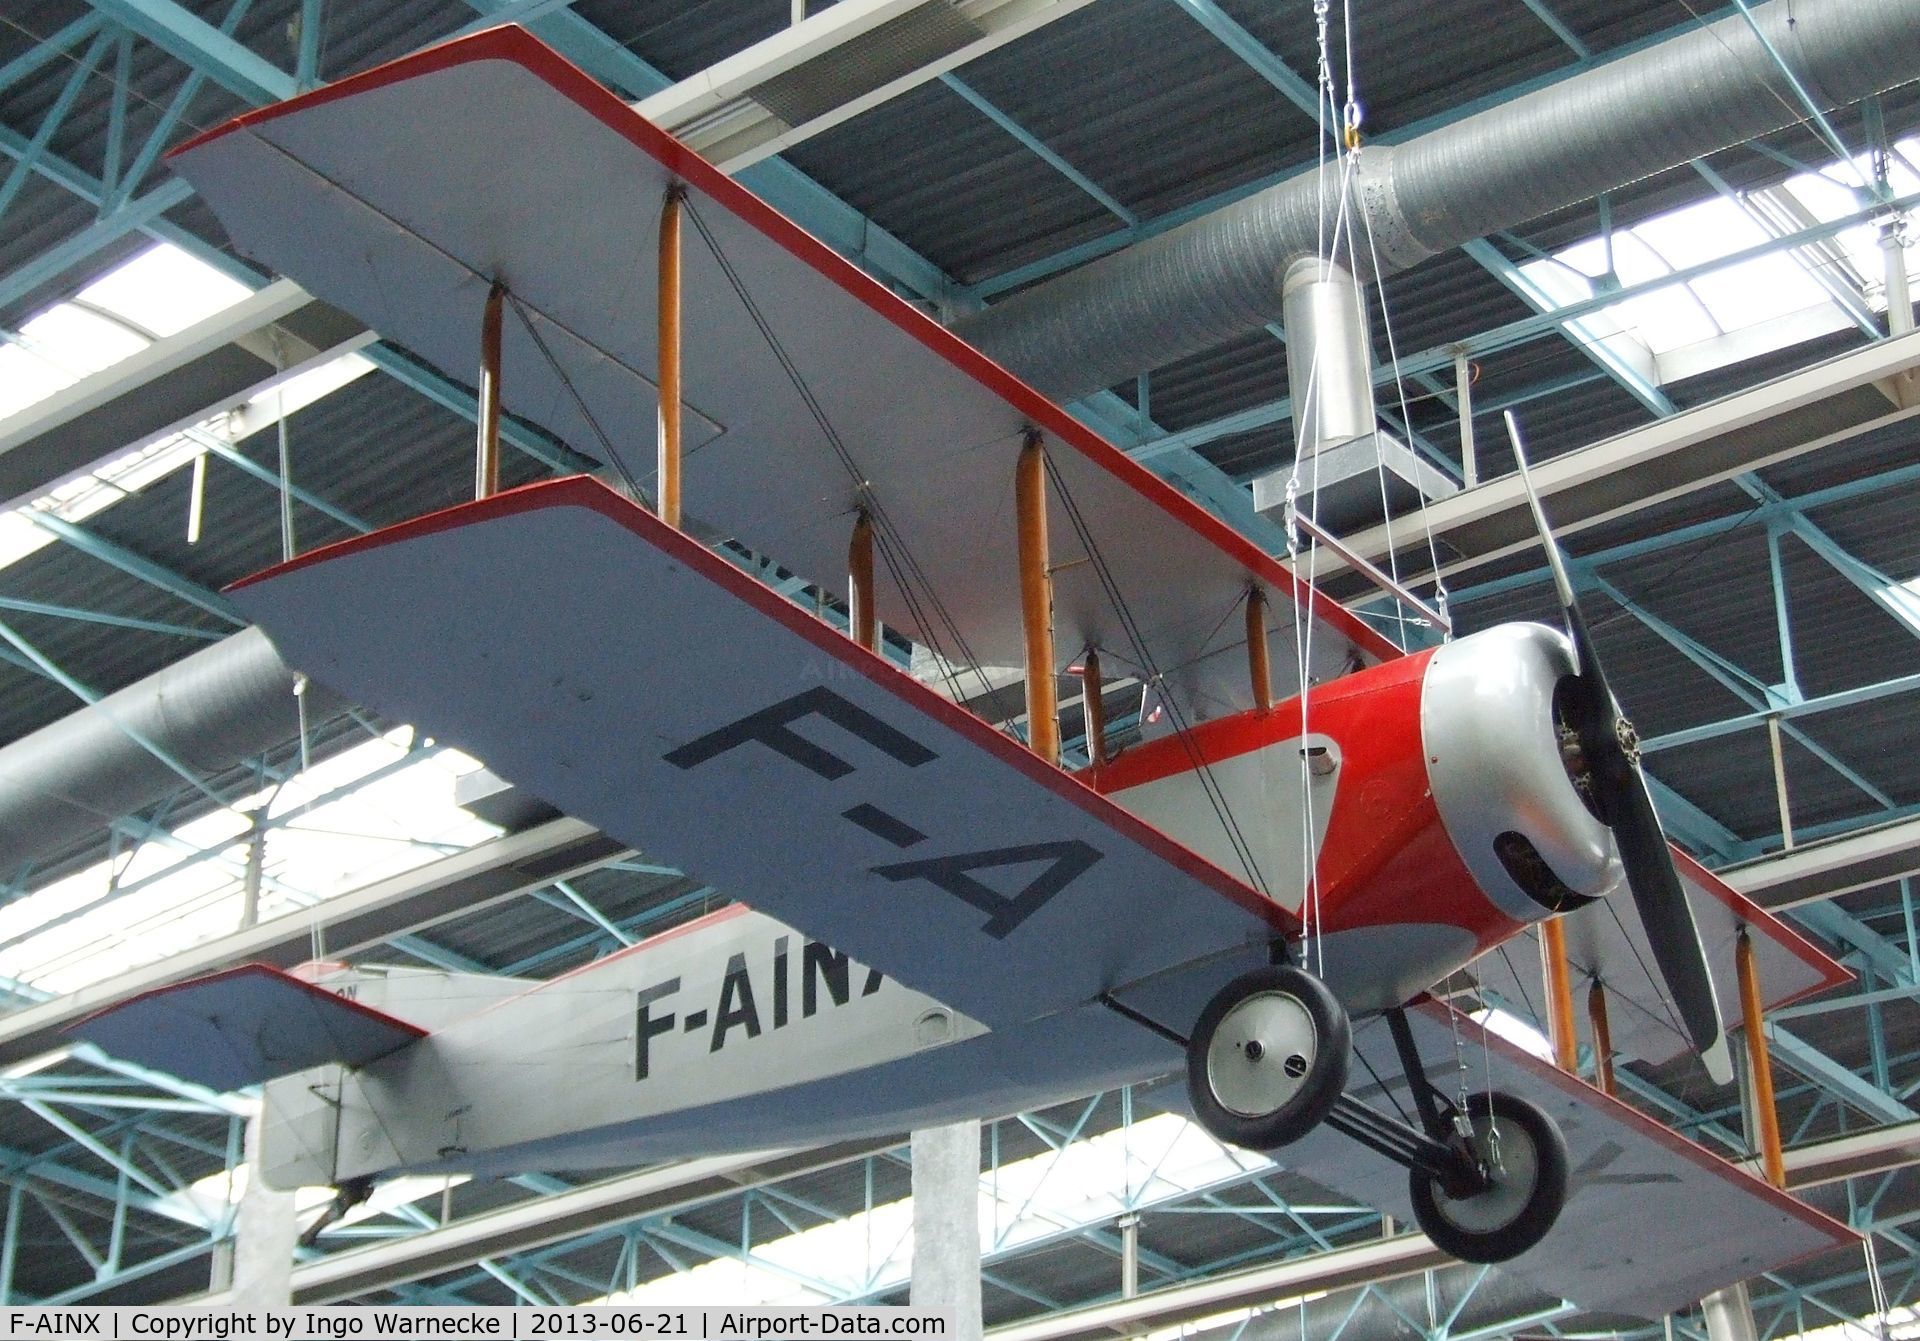 F-AINX, Caudron C.60 C/N 6184/49, Caudron C.60 at the Musee de l'Air, Paris/Le Bourget